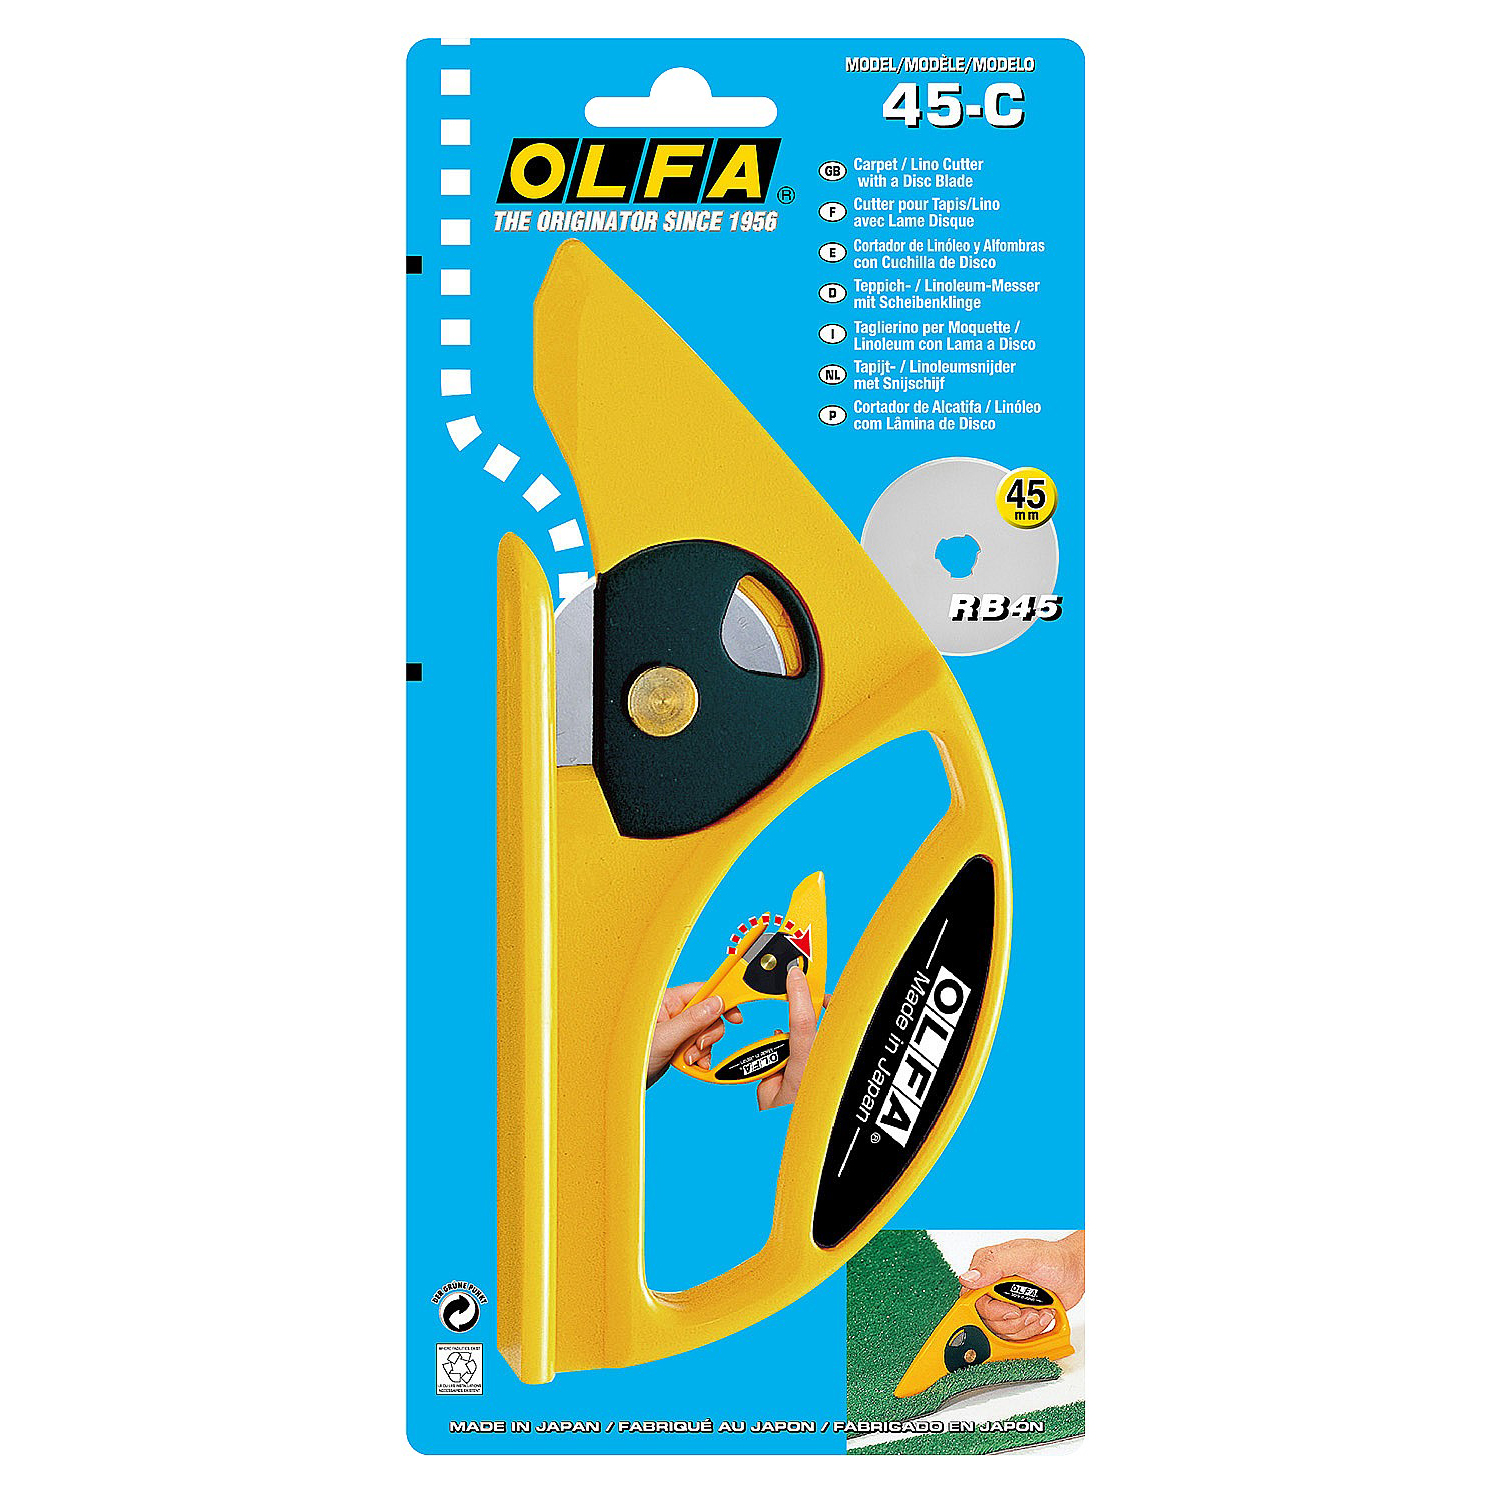 OLFA® Россия | Официальная продукция ОЛЬФА® - Нож OLFA для напольных .